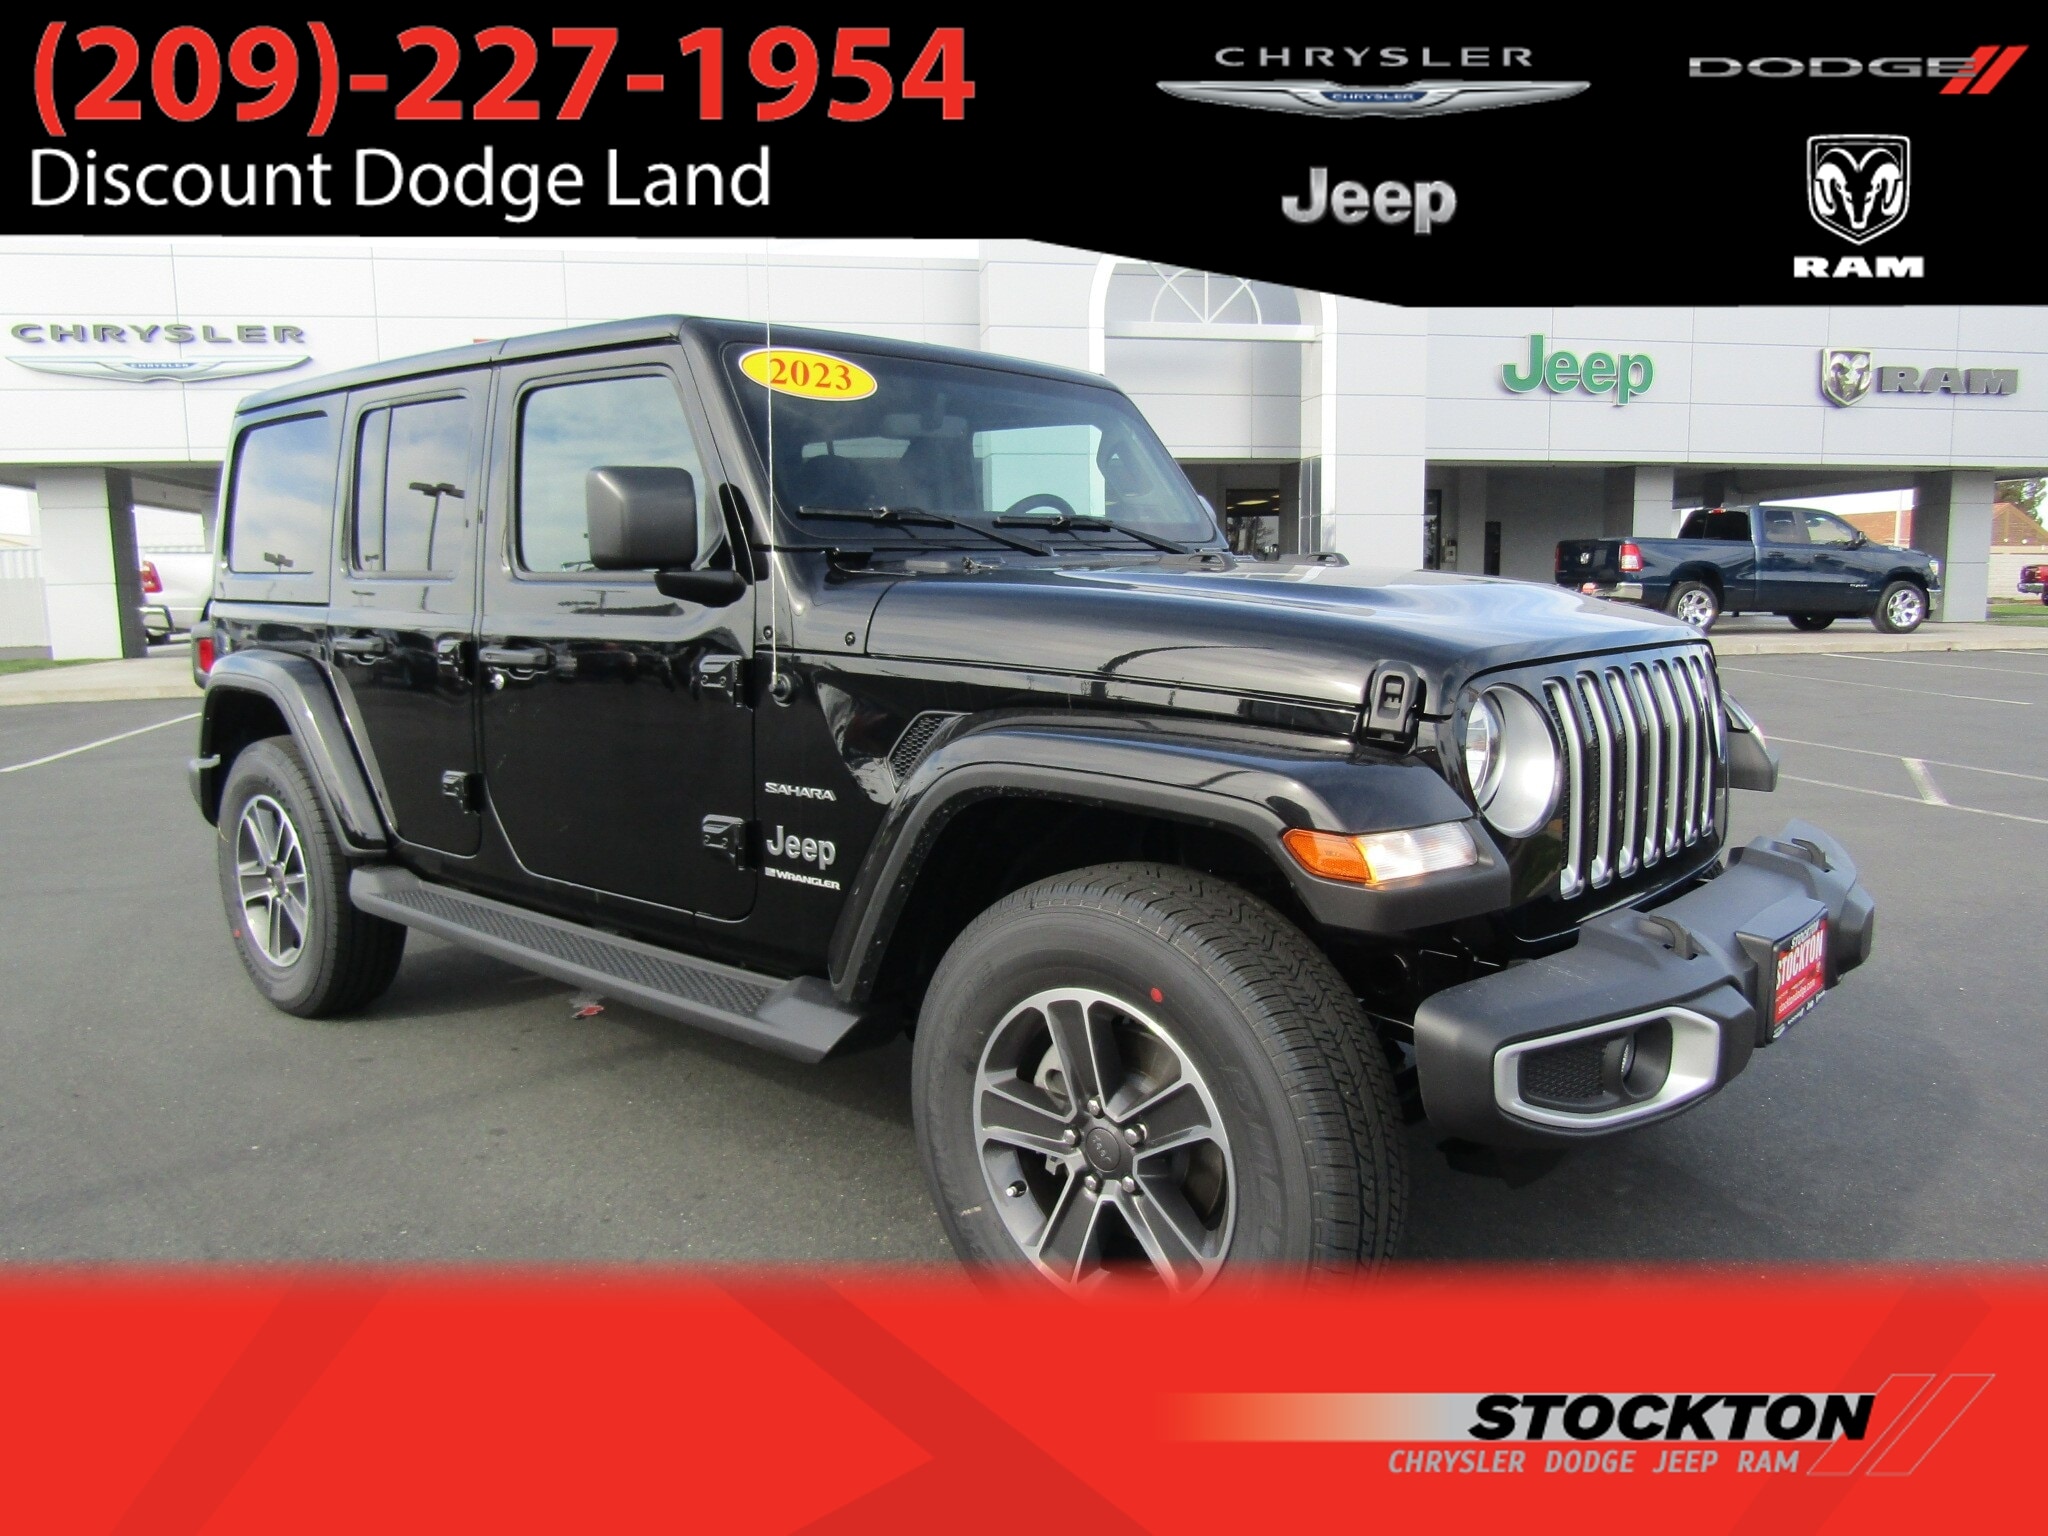 Buy or Lease Jeep Wrangler Lodi, Sacramento, Modesto, Stockton